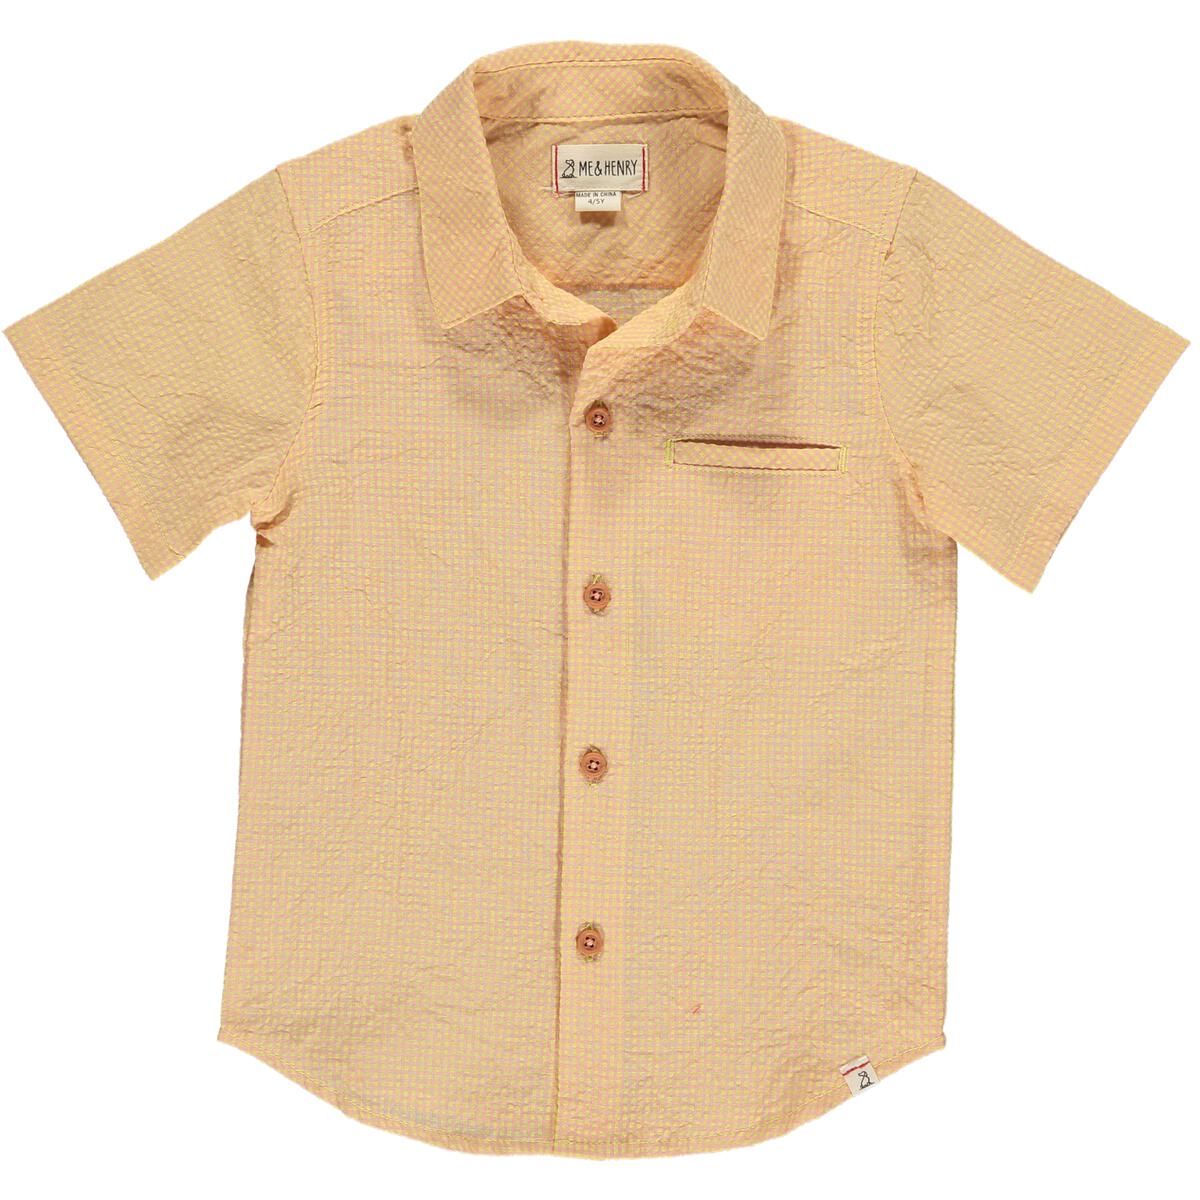 Apricot/yellow plaid woven shirt